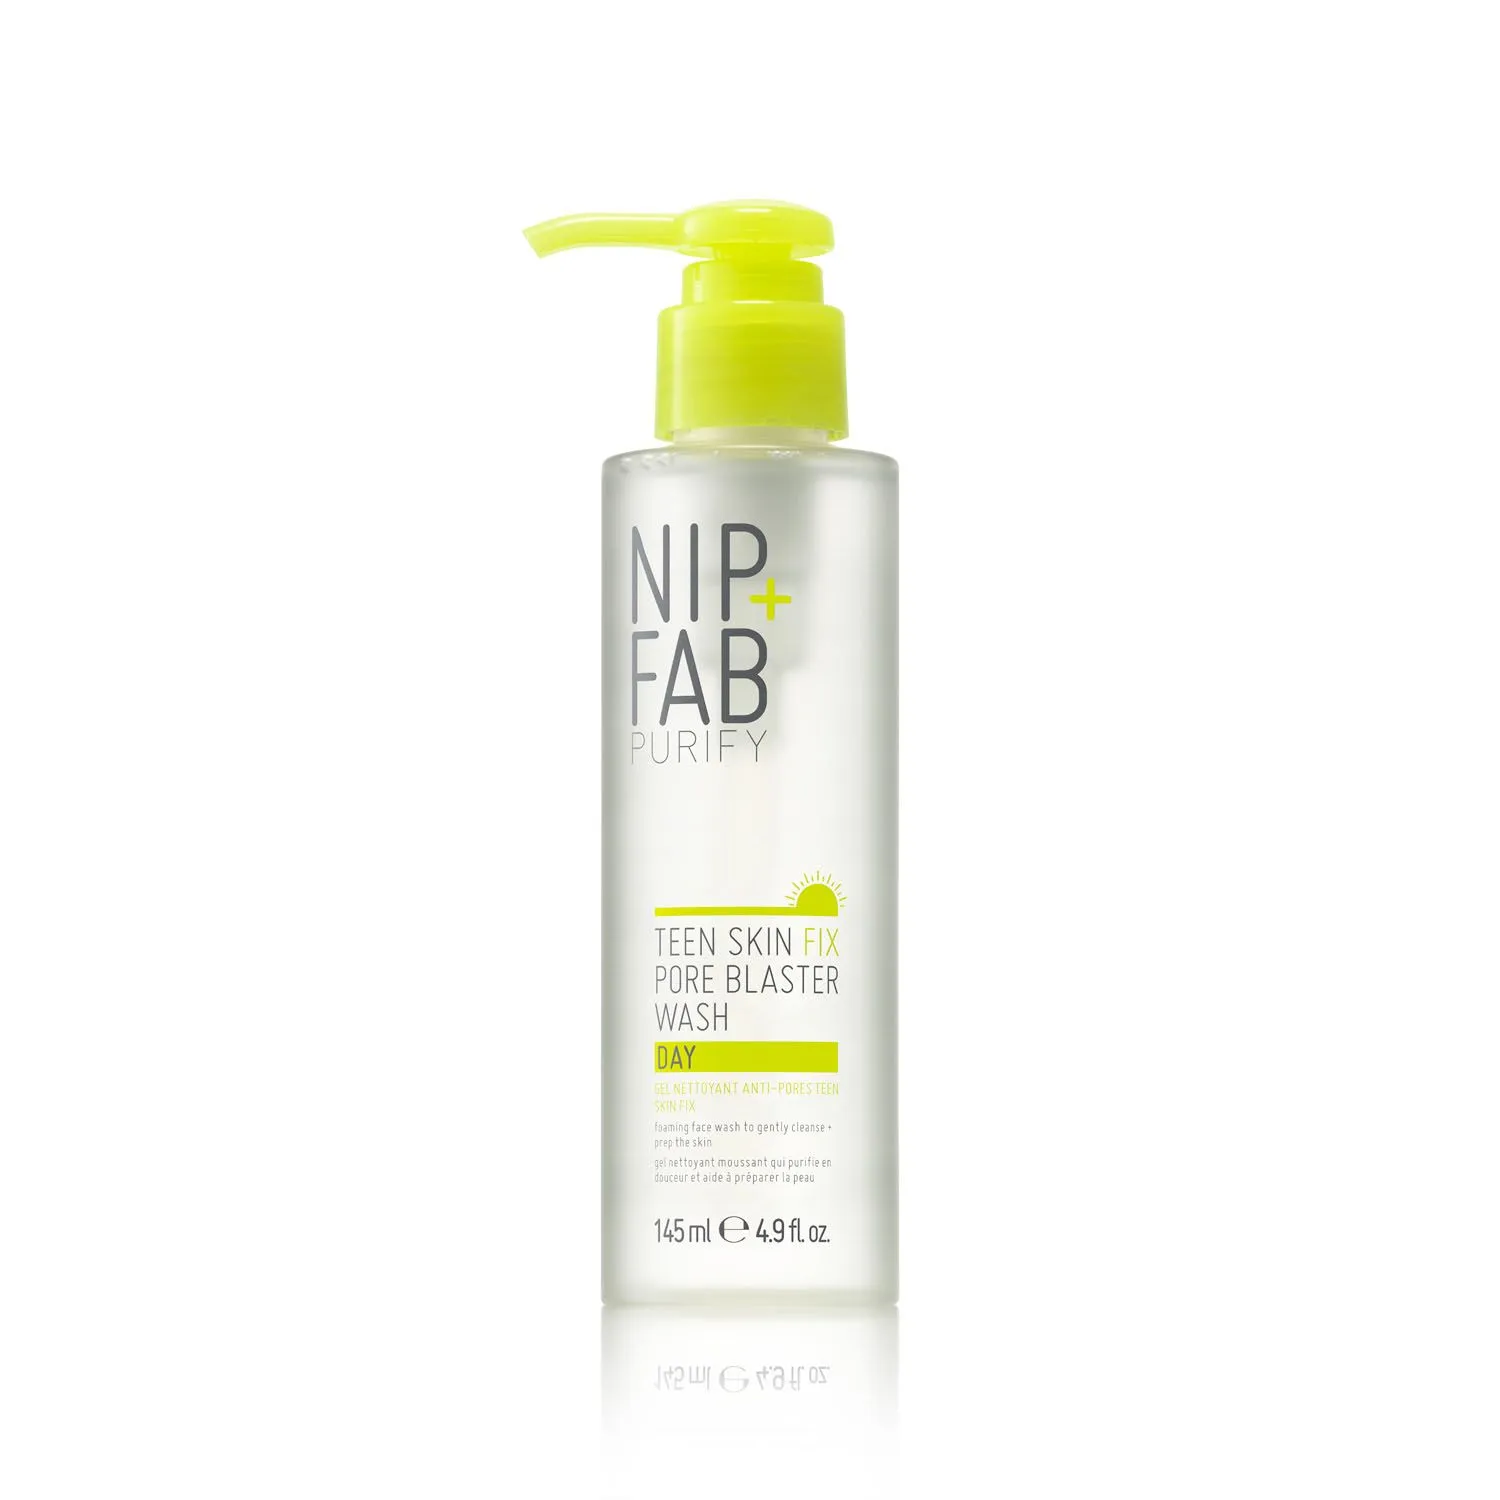 Nip+fab Purify Teen Skin Fix Pore Blaster Wash Day 145ml